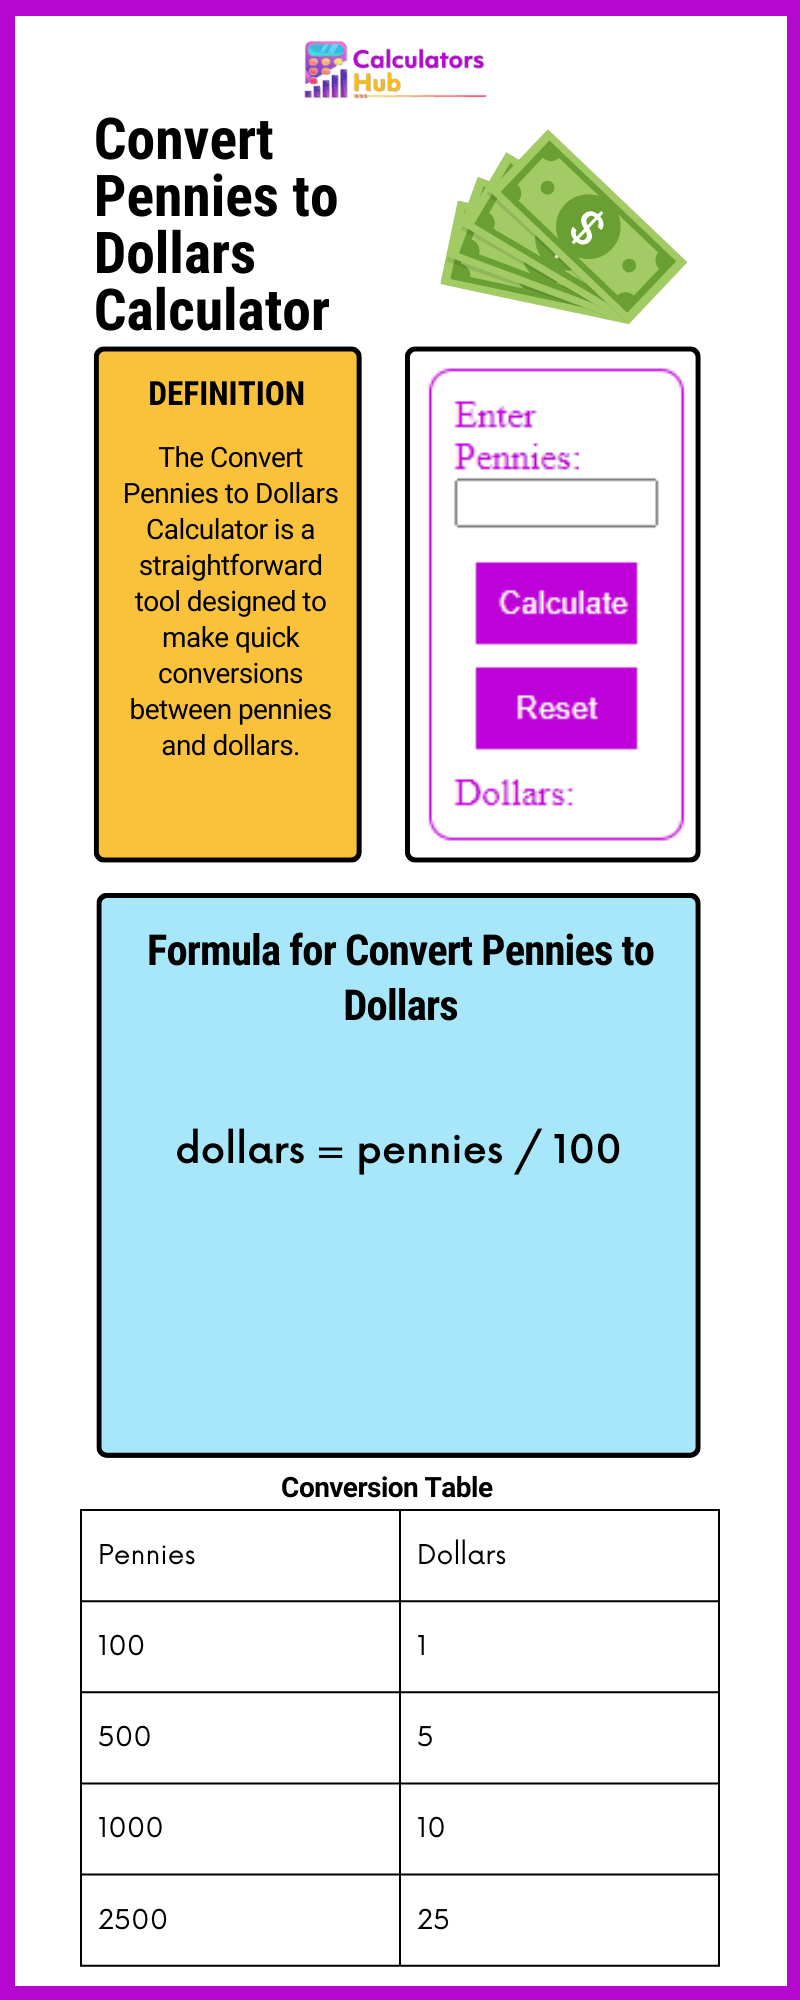 Convert Pennies to Dollars Calculator